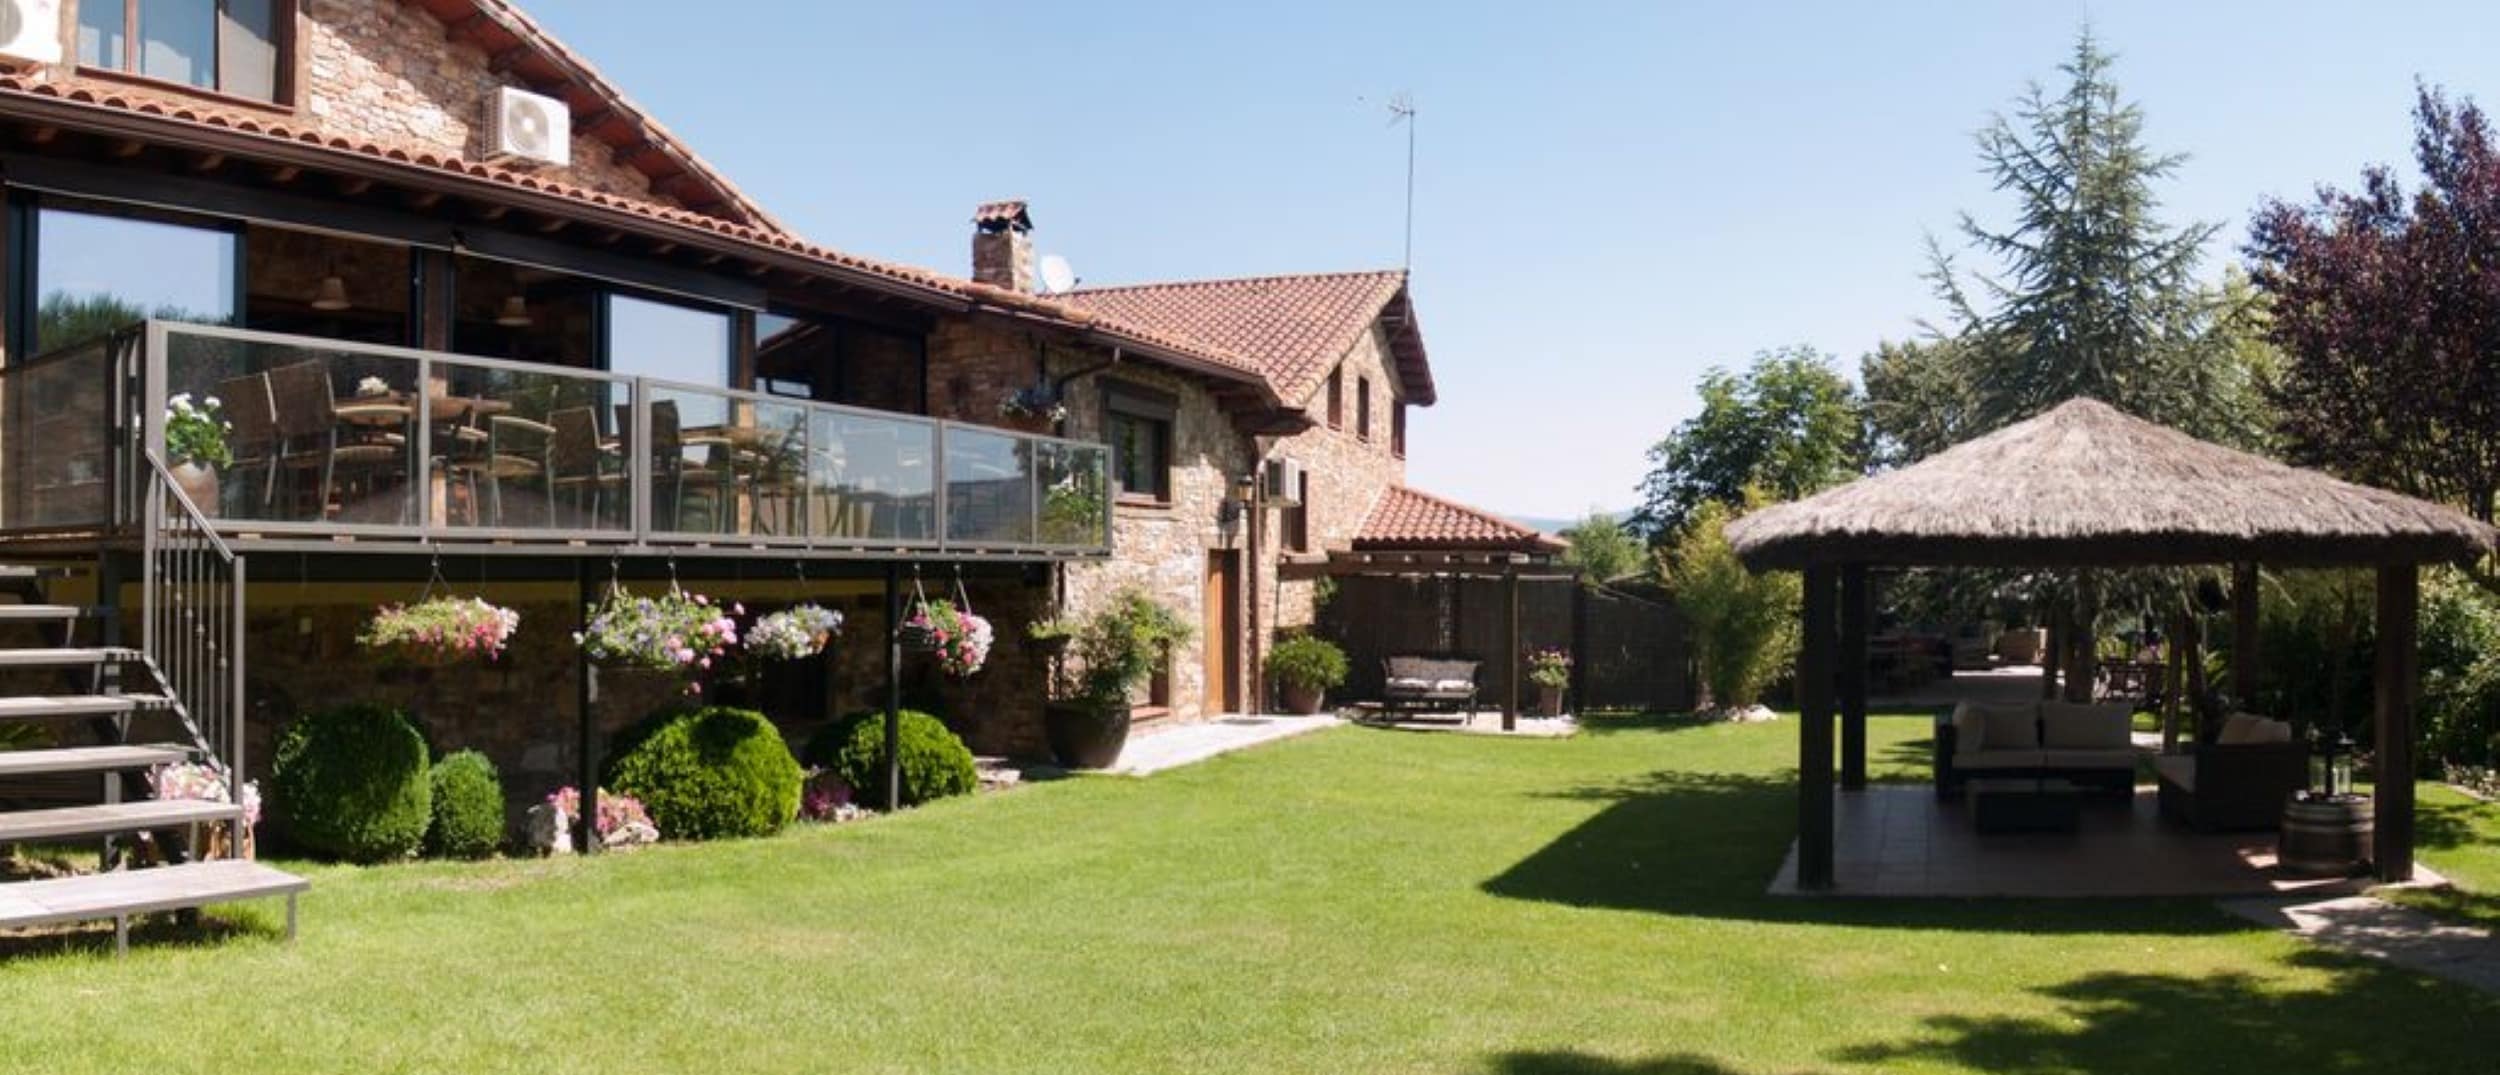 Tu casa rural ideal está en Madrid